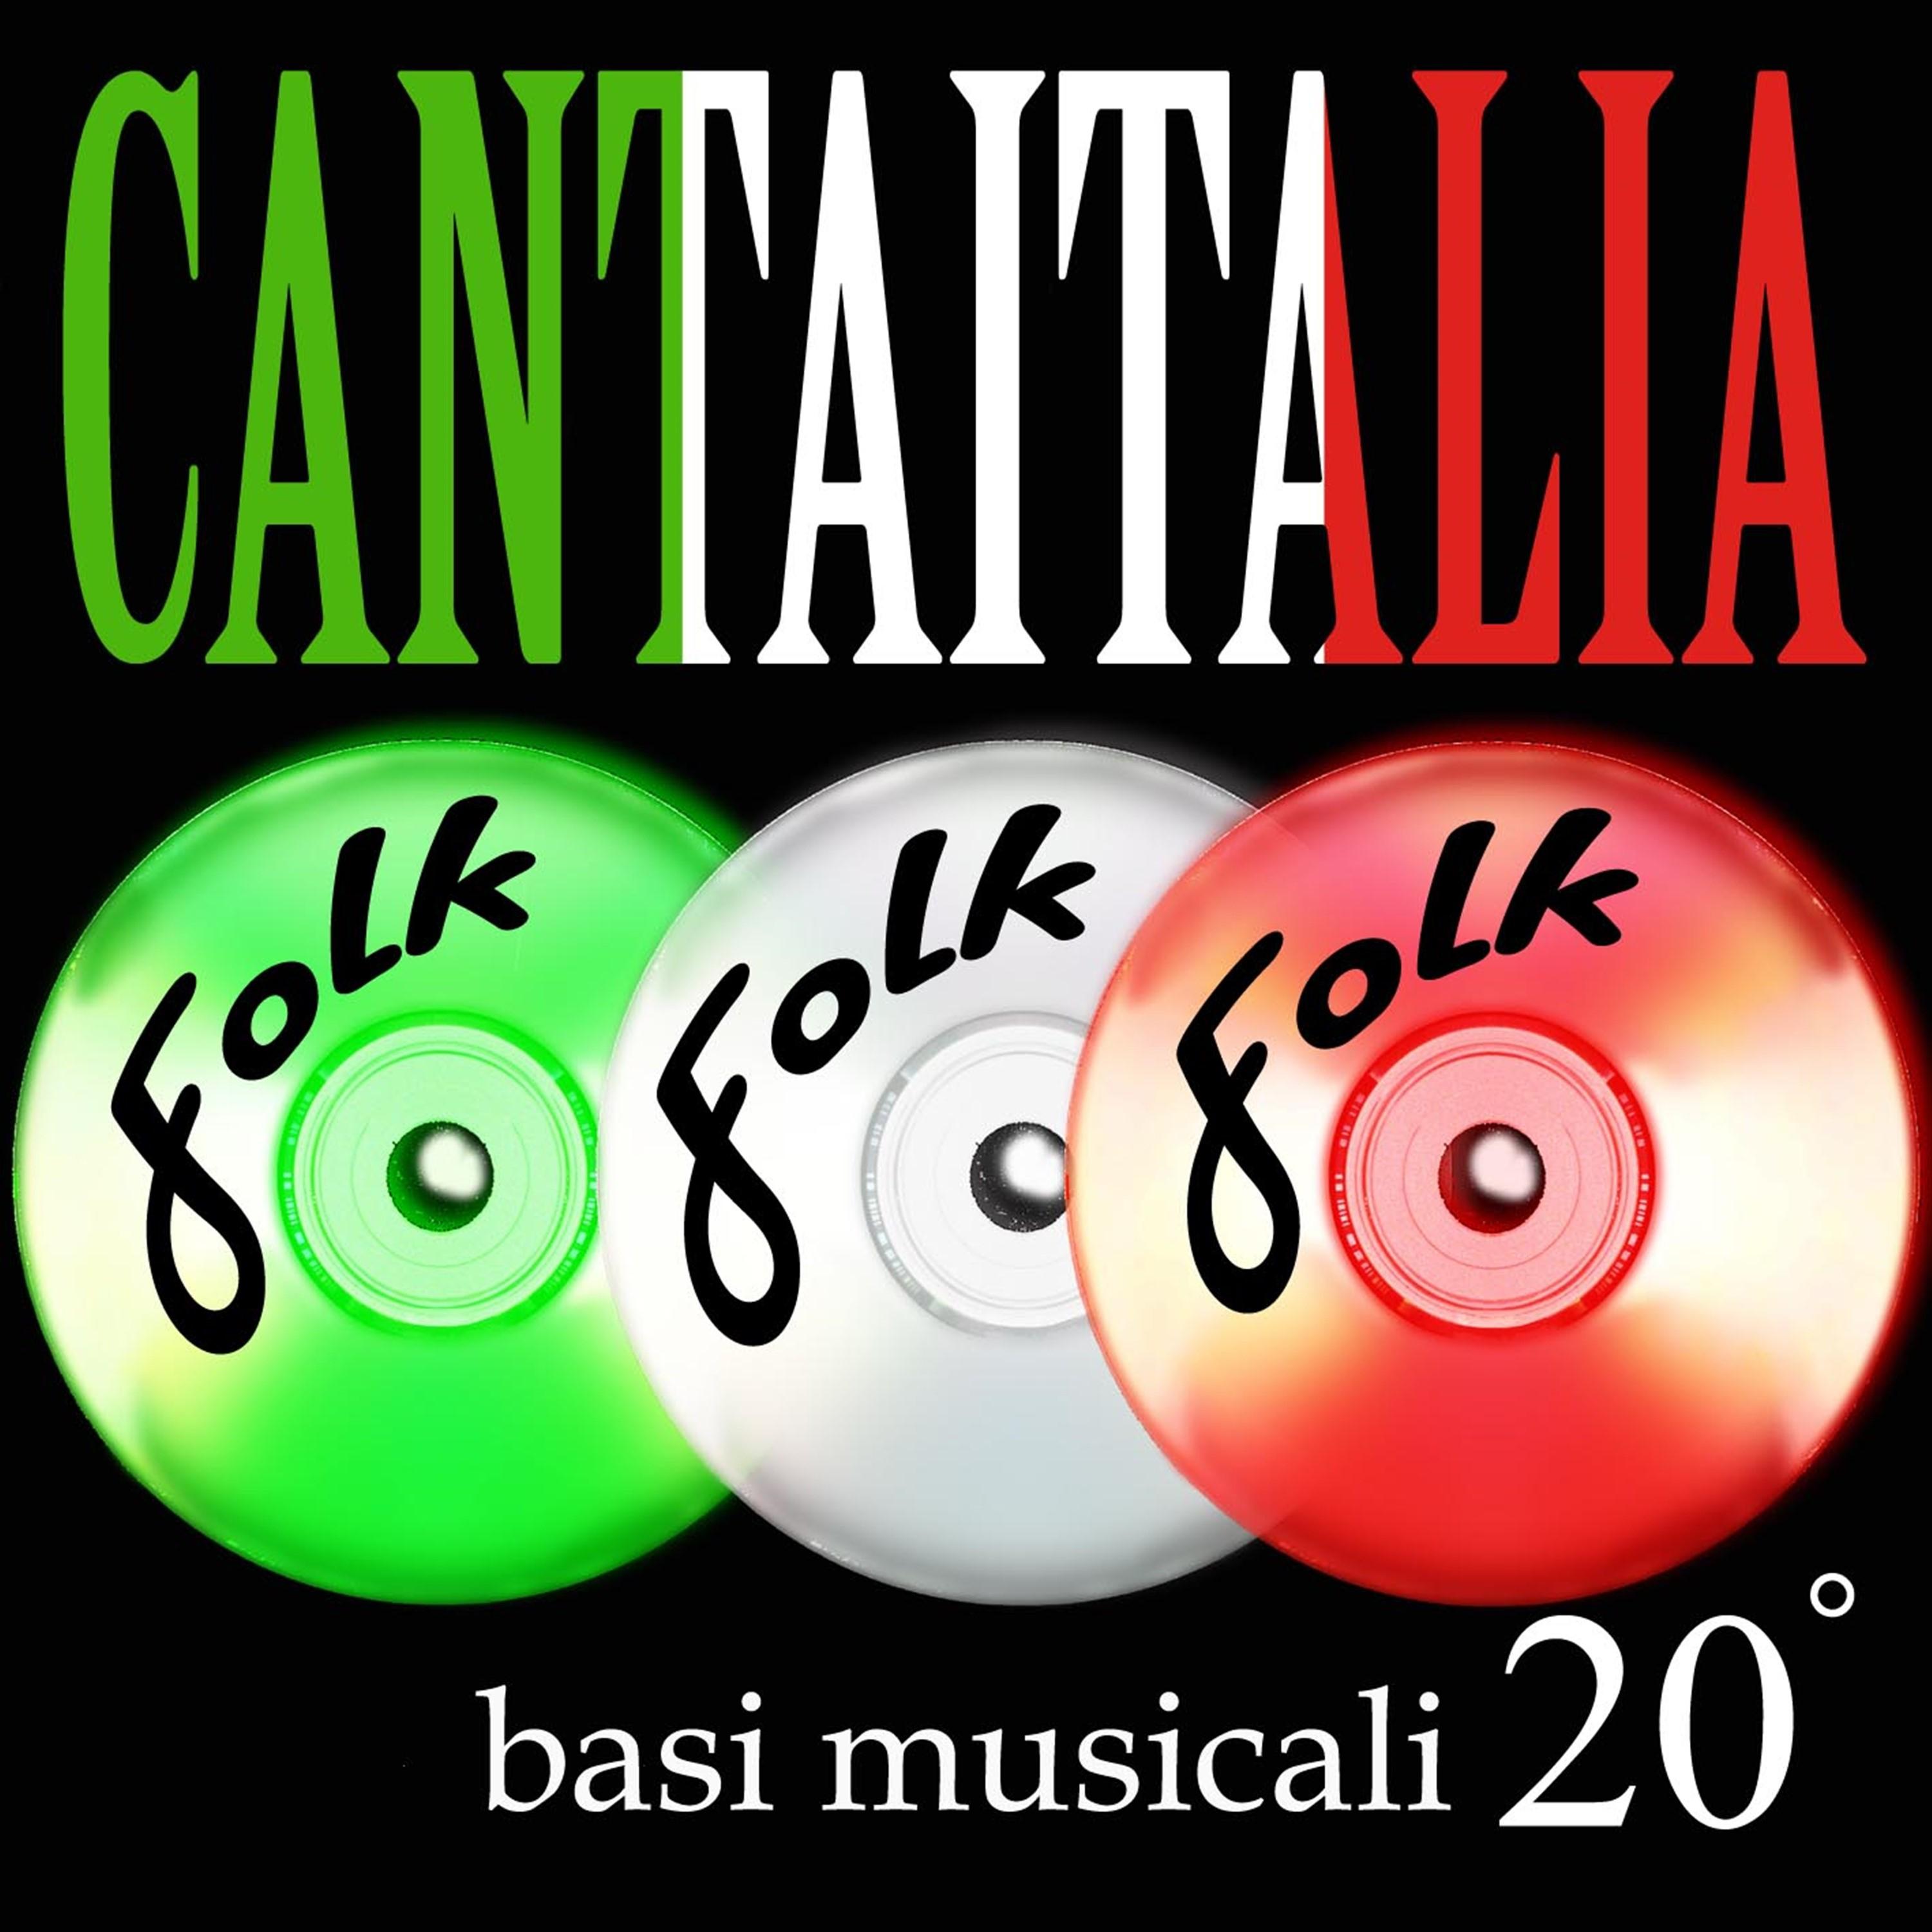 Canta Italia Vol. 20 - basi musicali folk